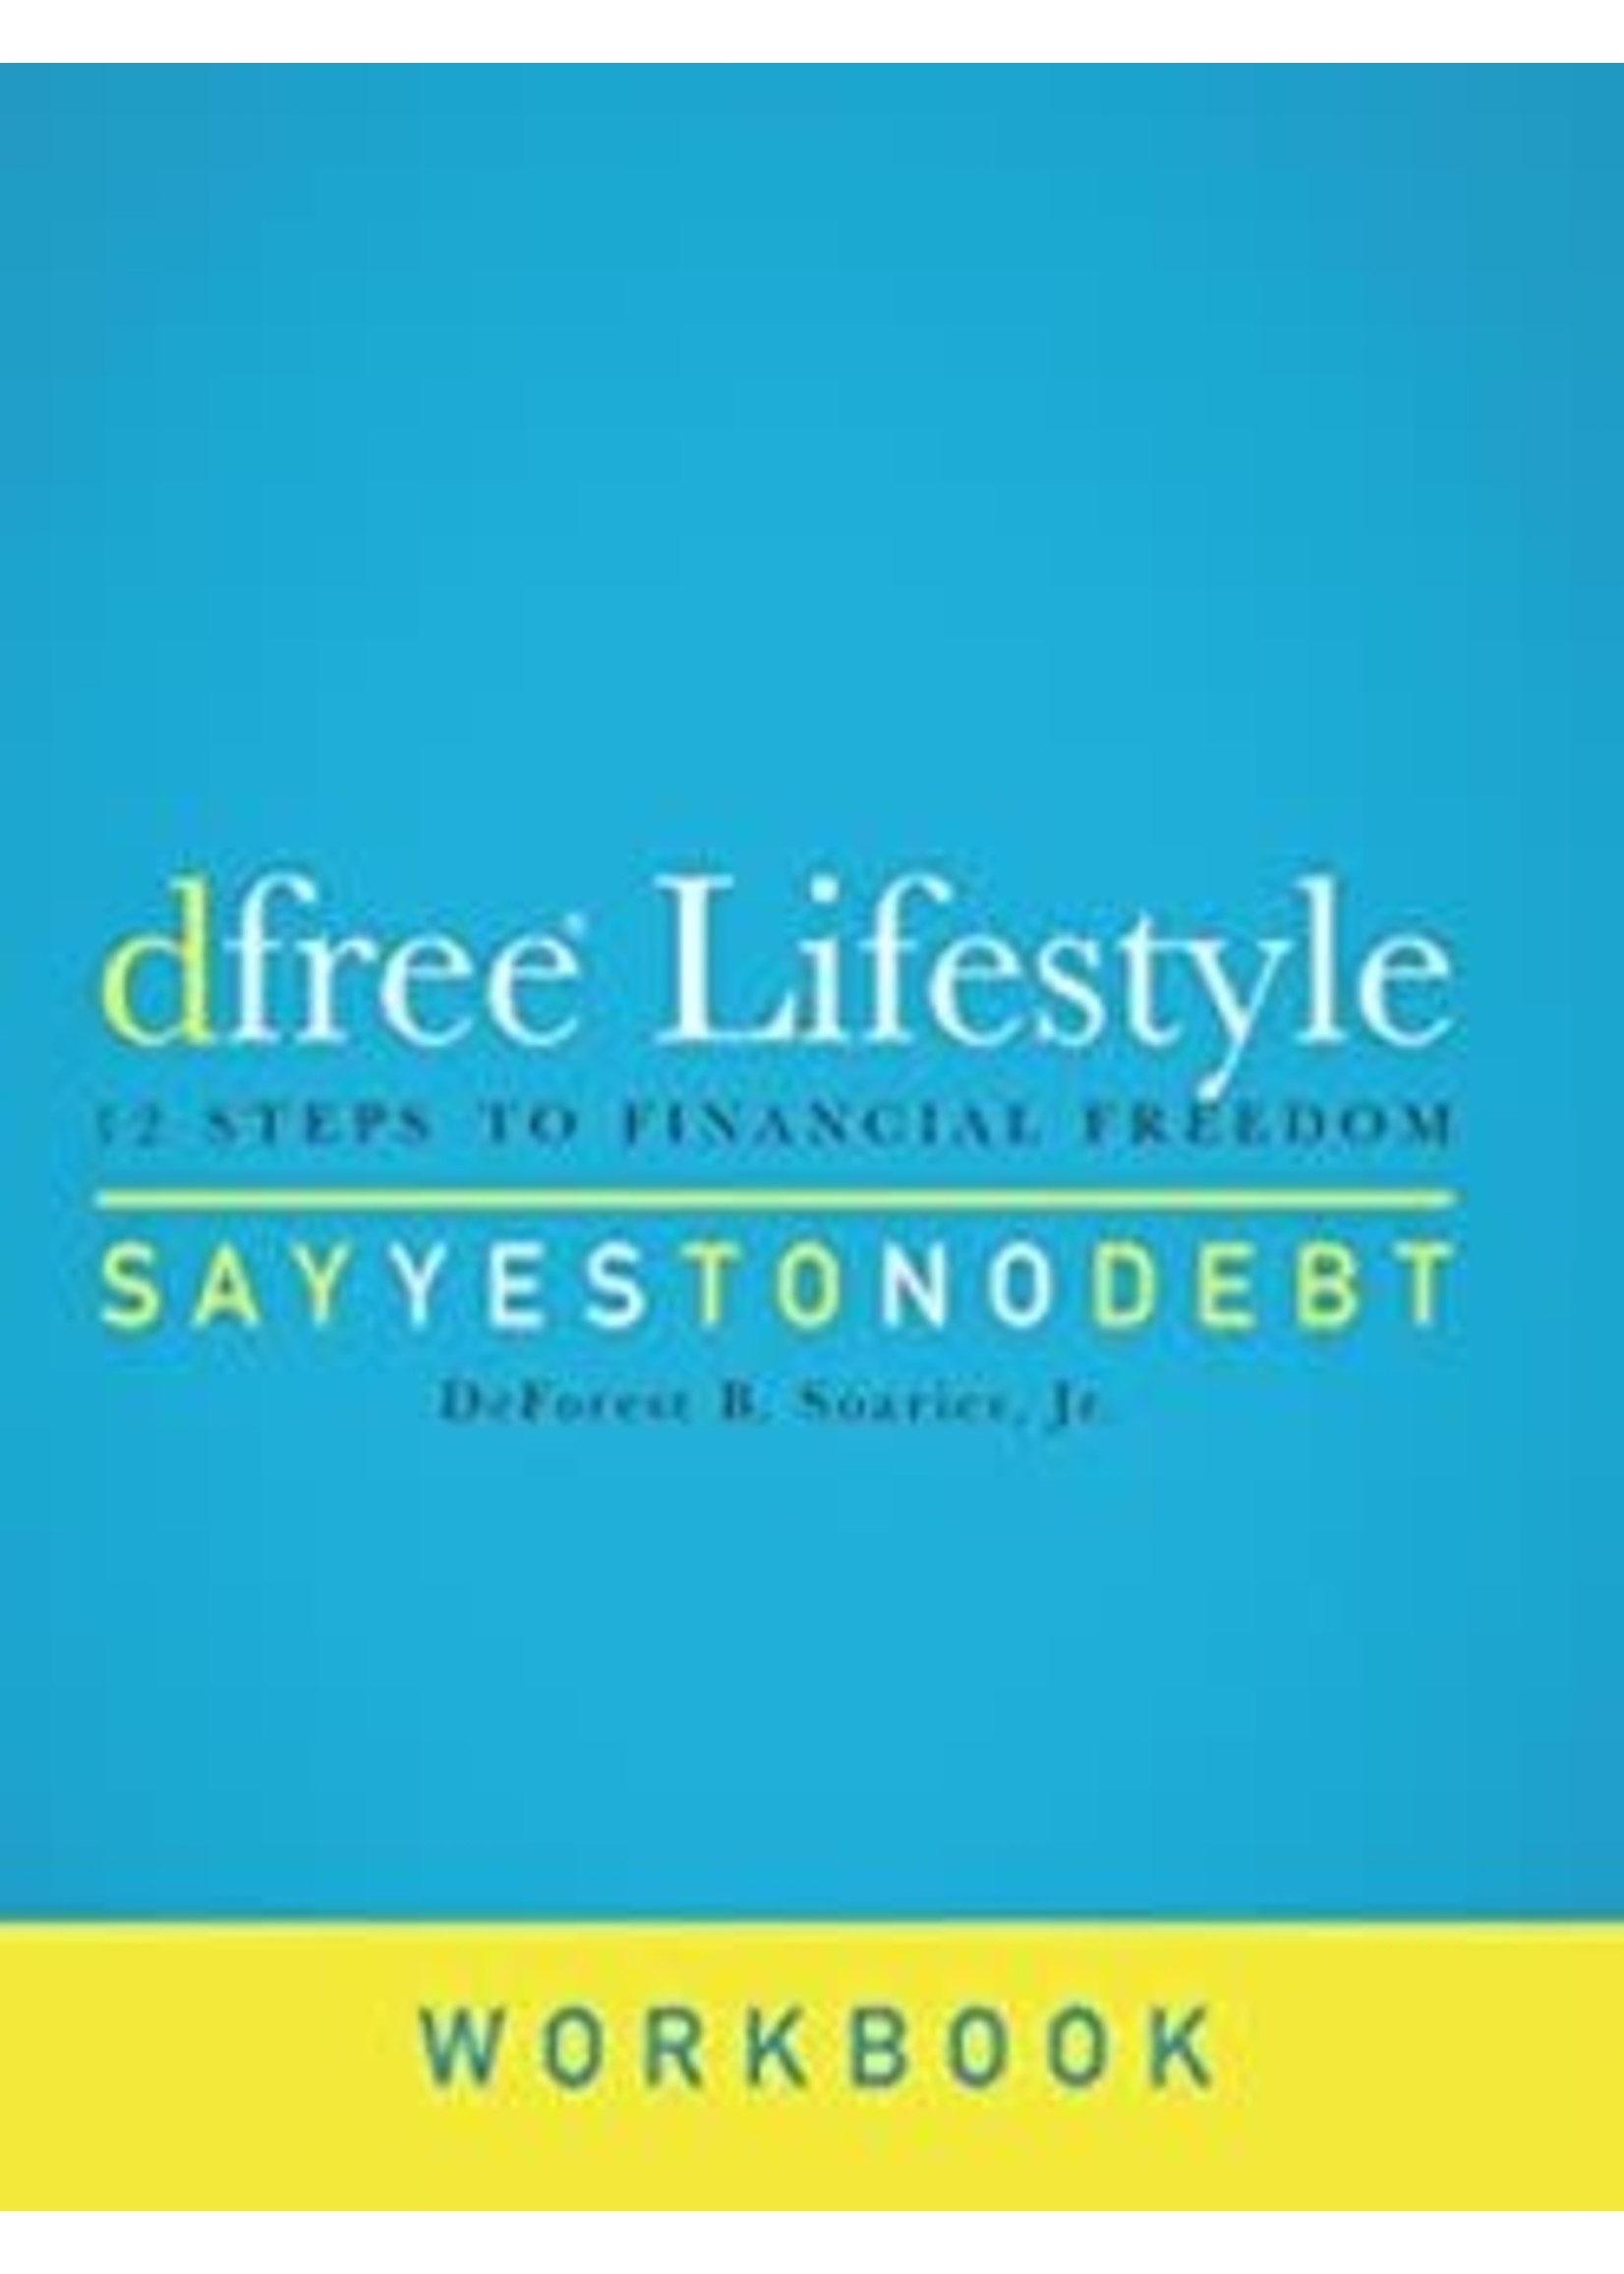 dfree Lifestyle Workbook